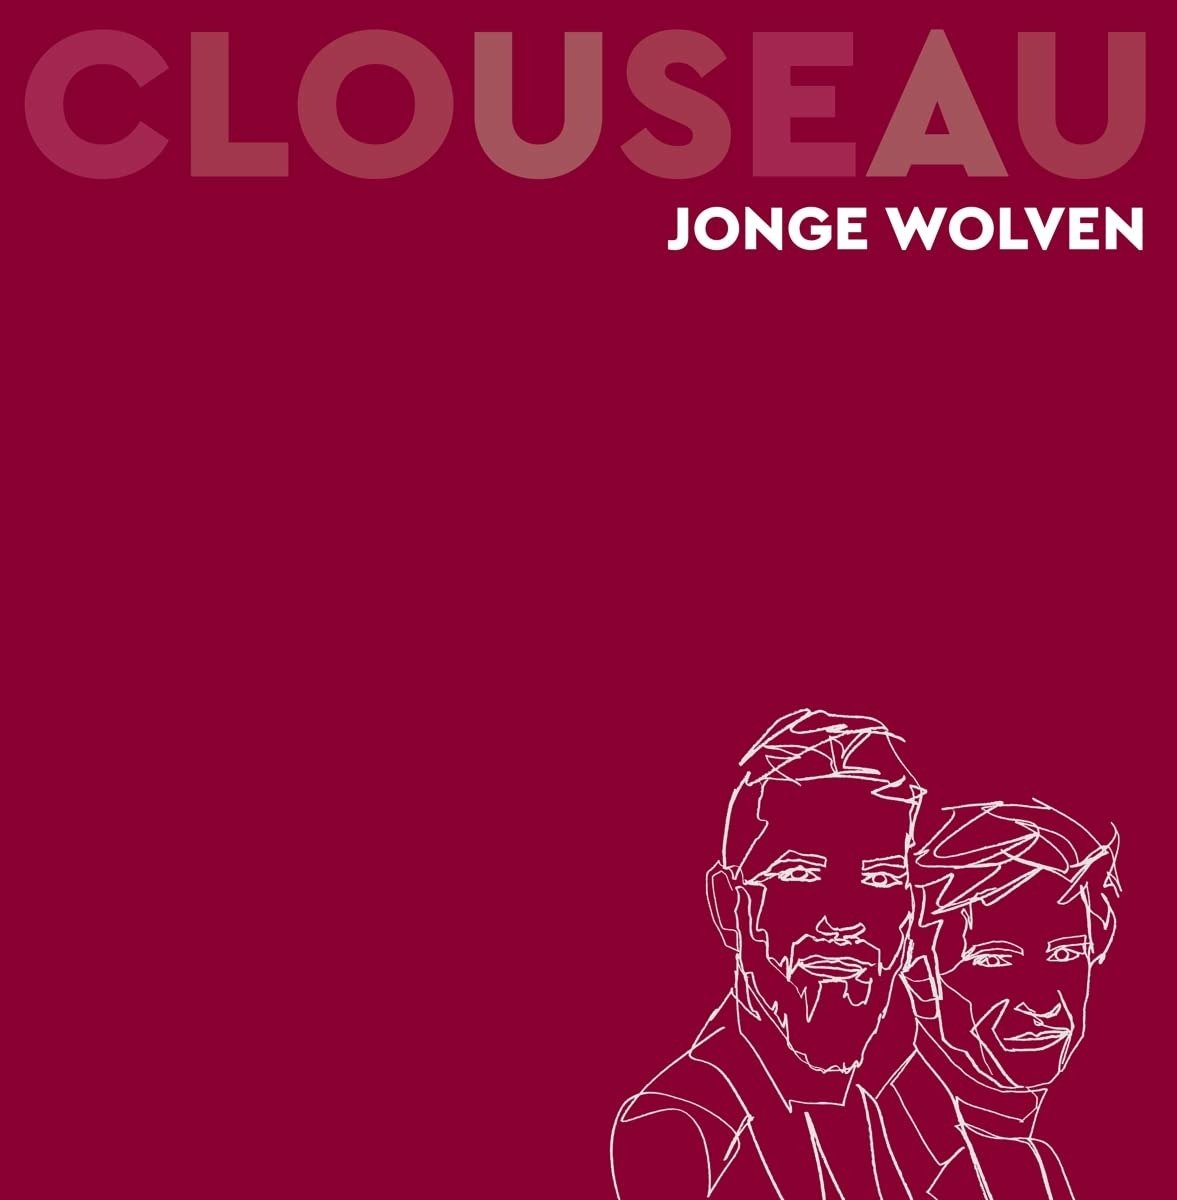 CD Shop - CLOUSEAU JONGE WOLVEN